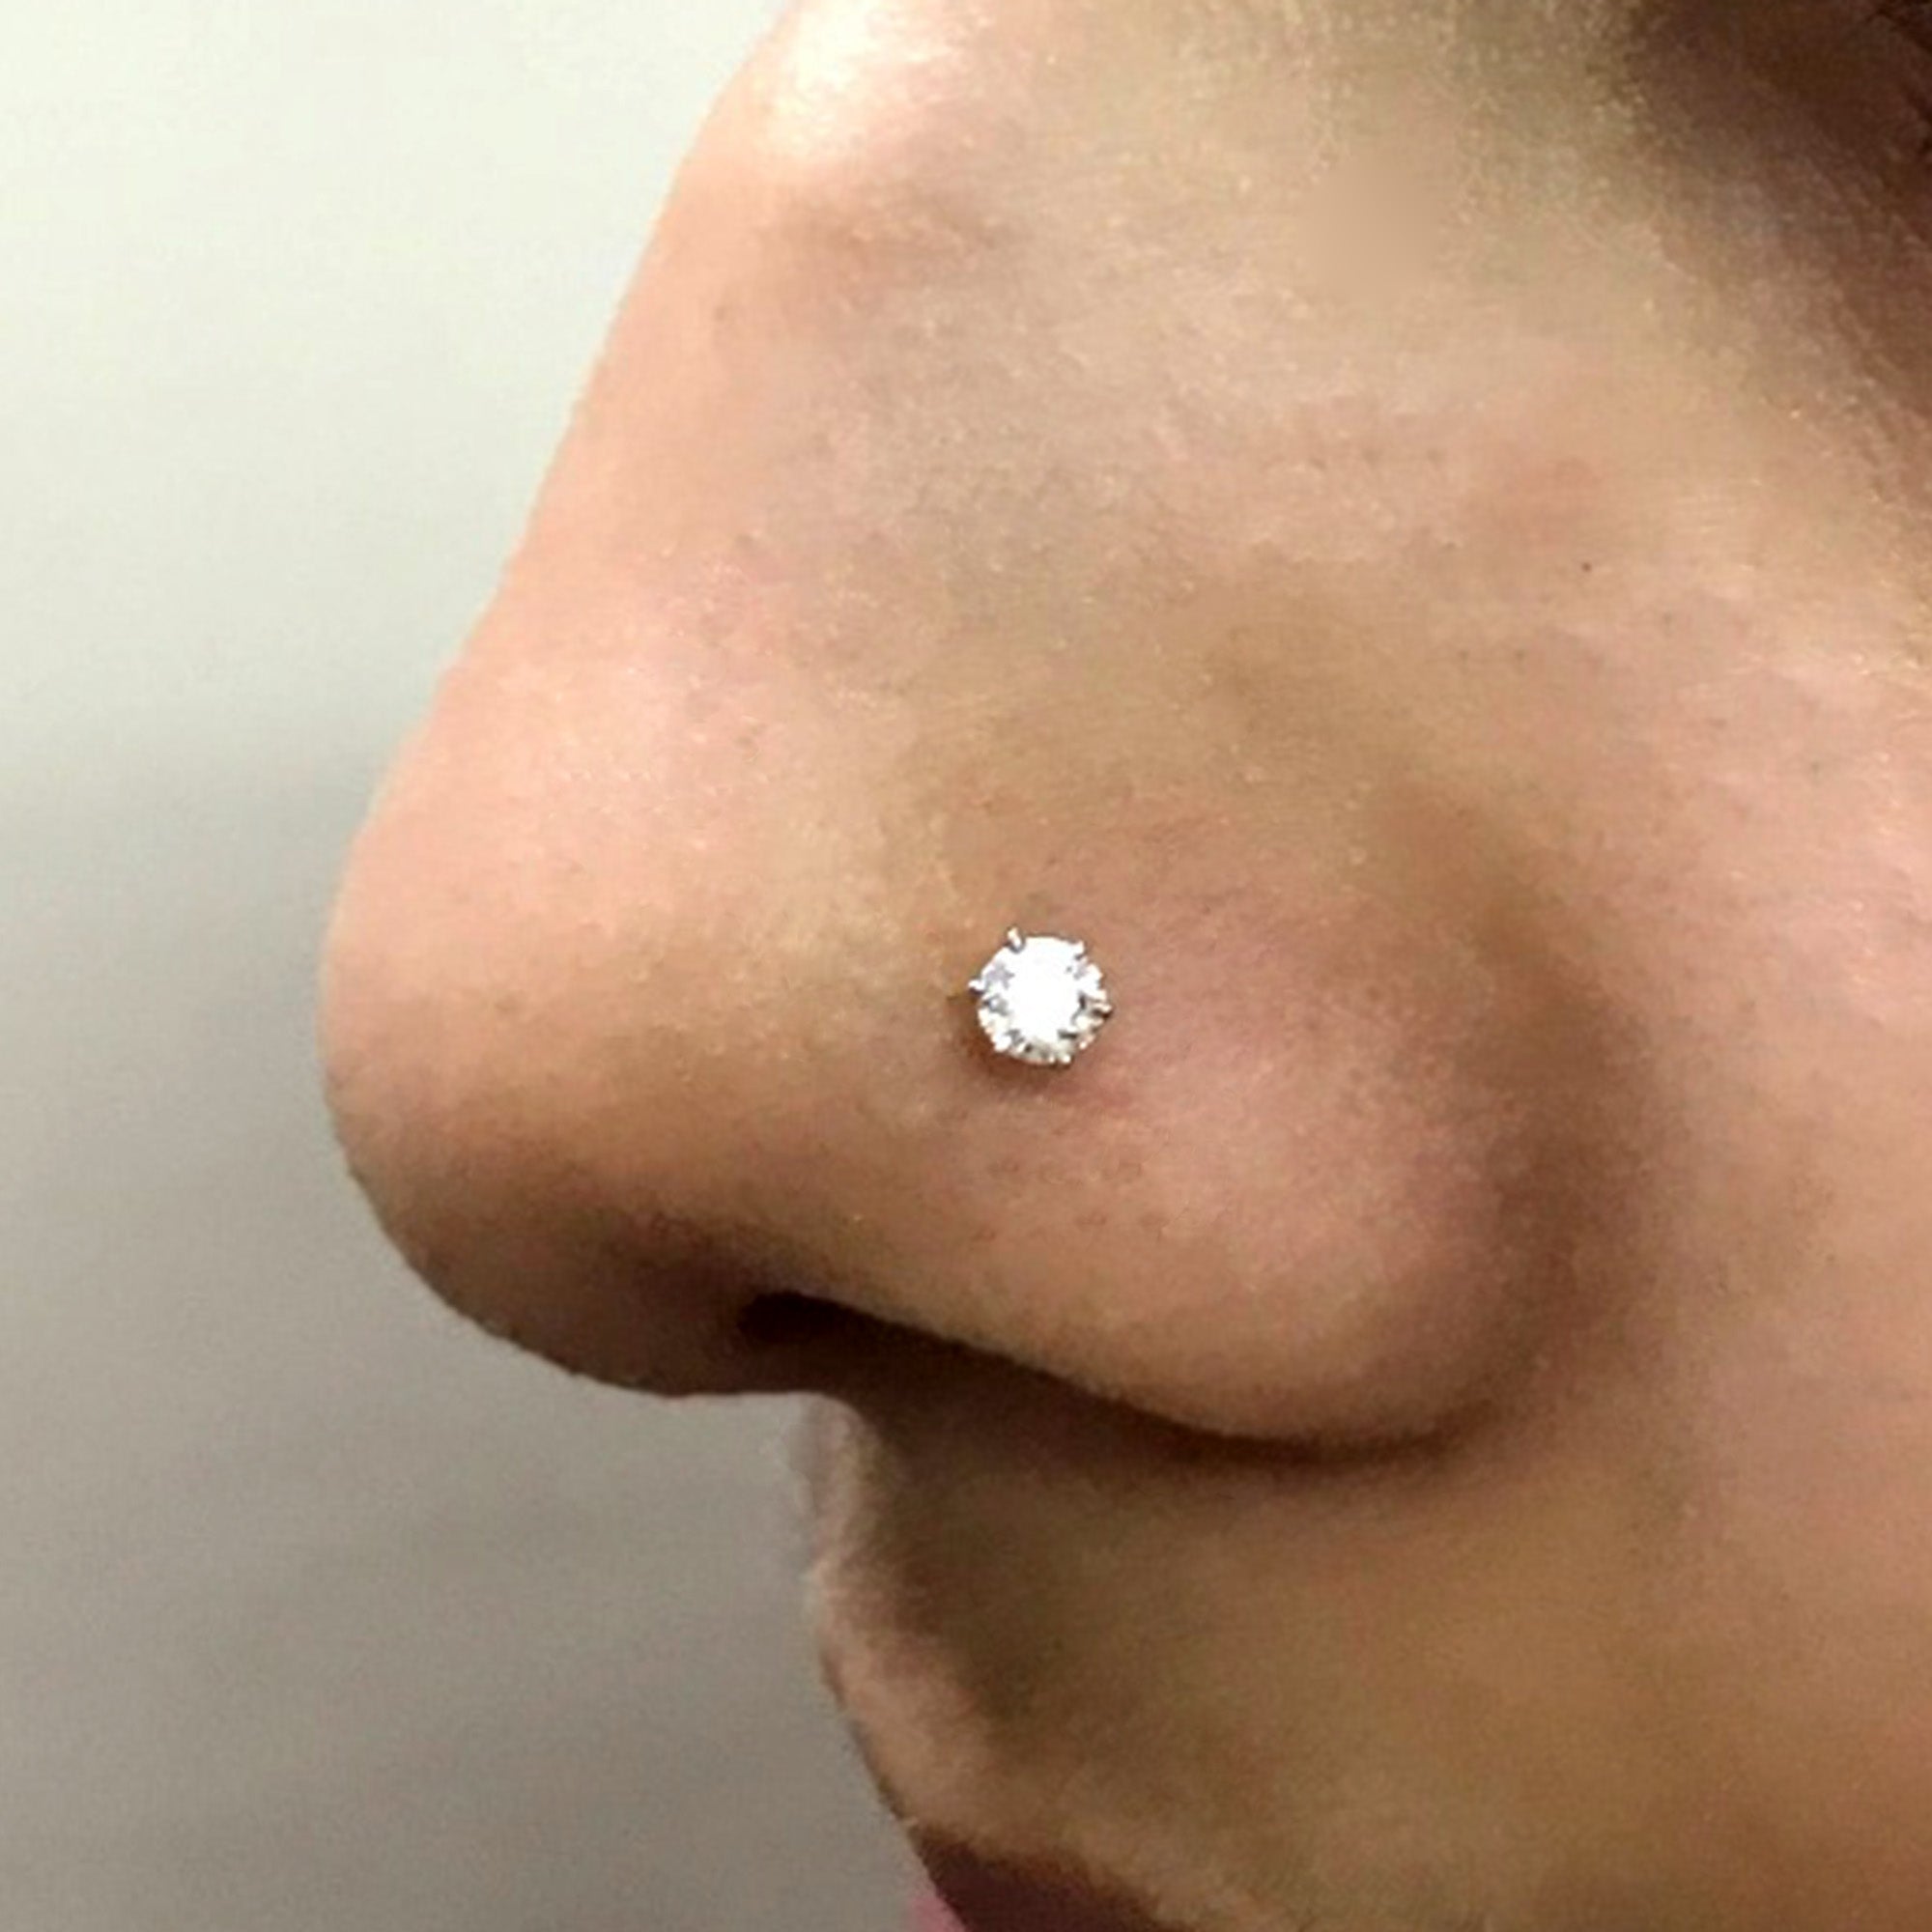 DIAMOND Nose Ring (Screw Type, Low-Profile)